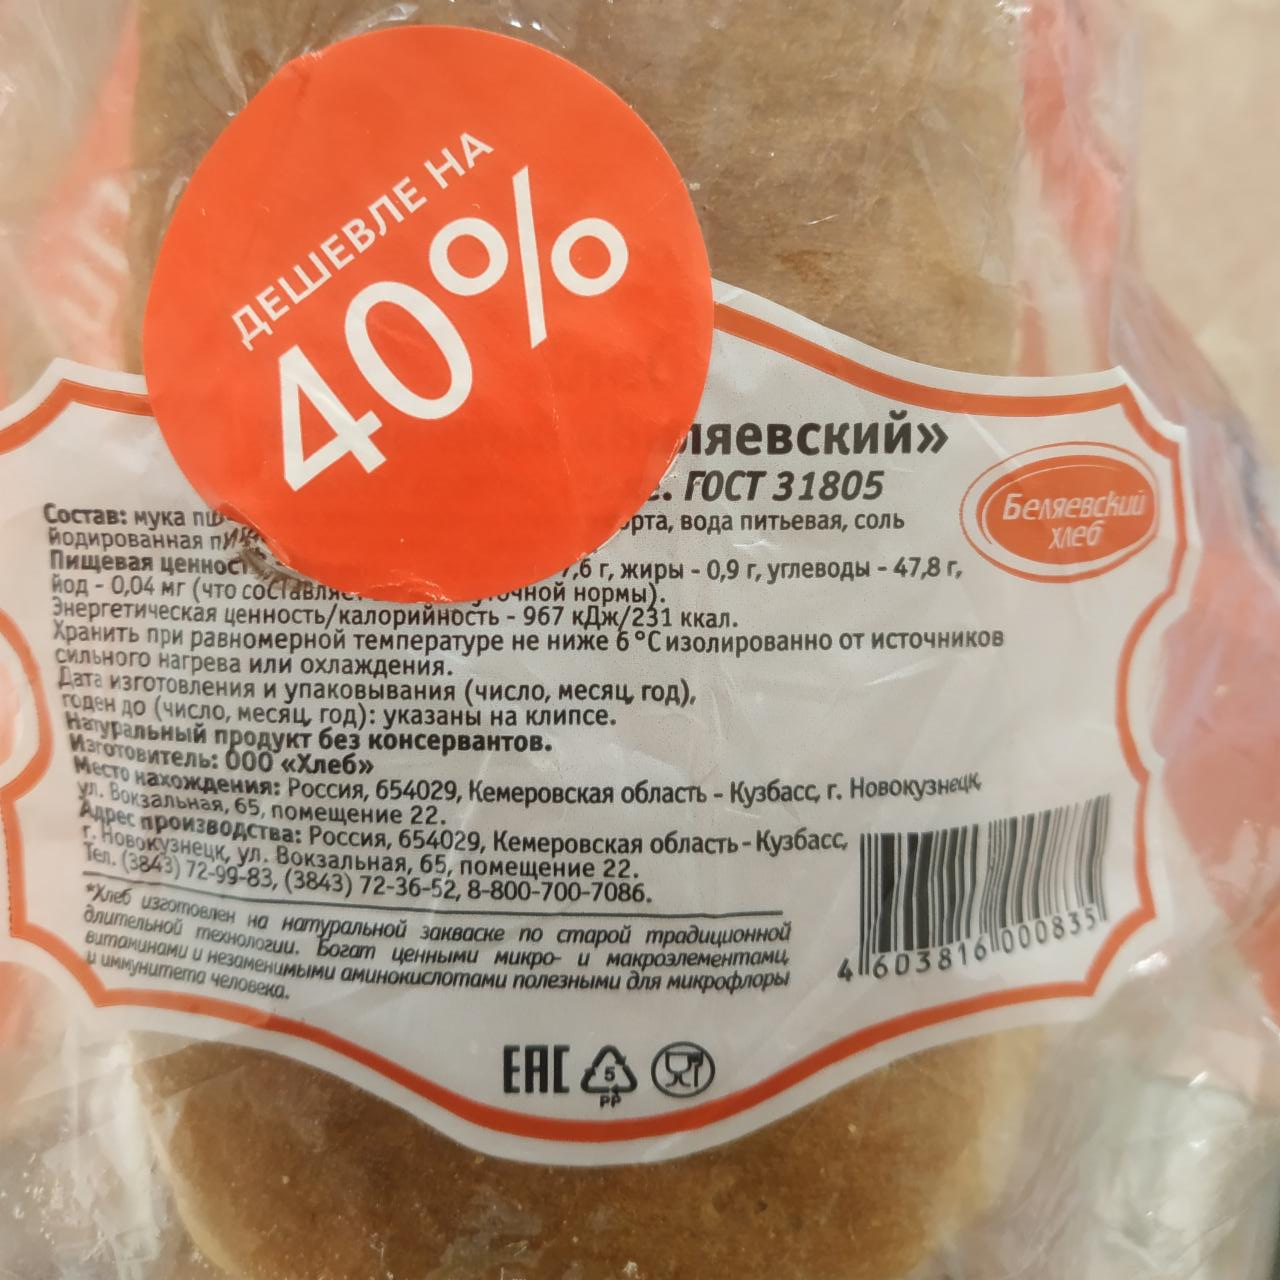 Фото - Хлеб беляевский пшеничный Беляевский хлеб